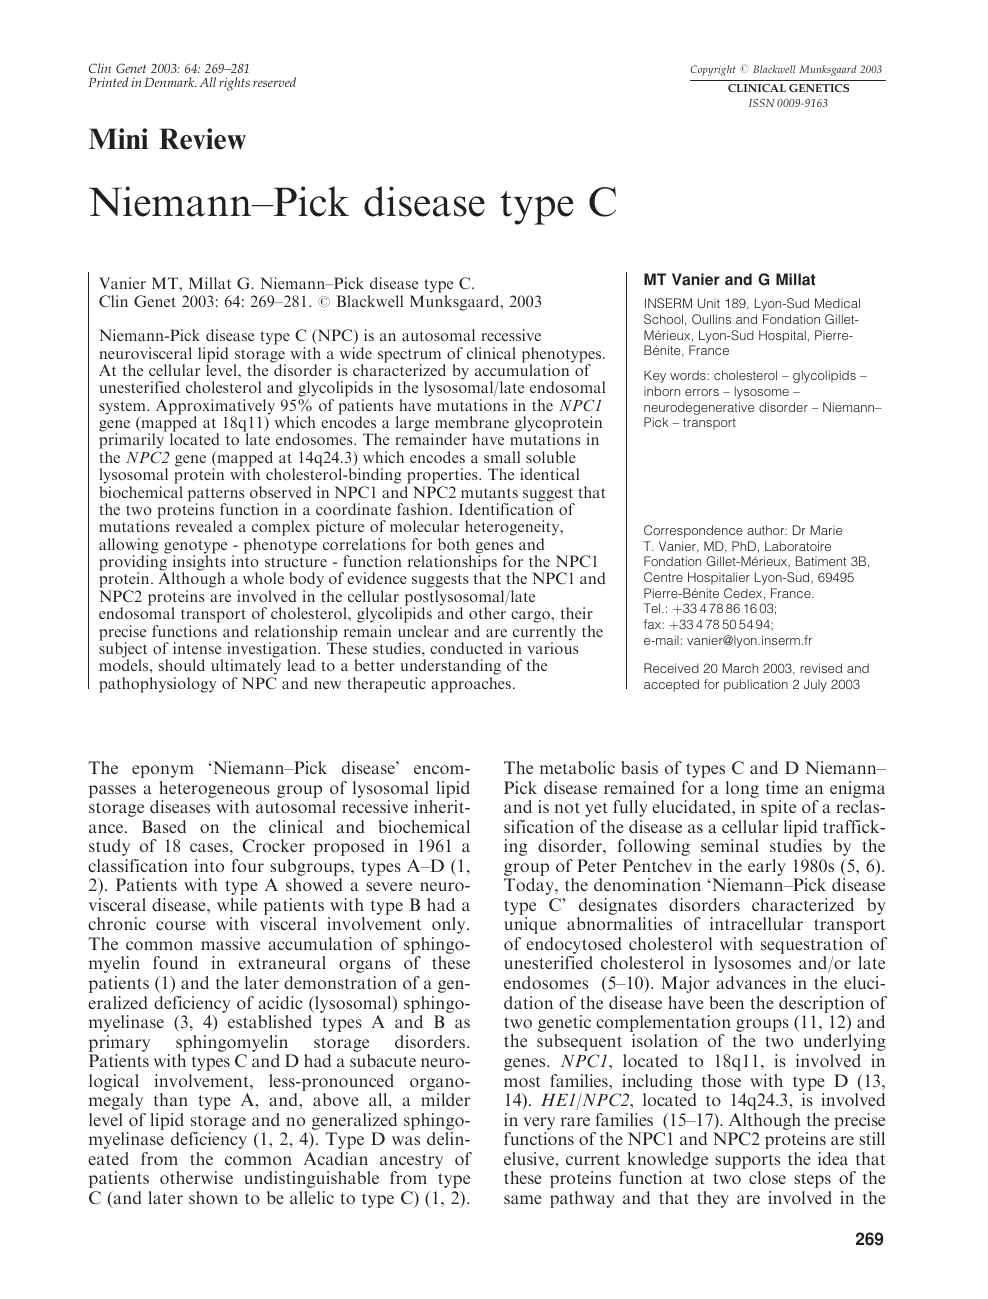 Niemann-Pick disease type C as a neurovisceral disease. Schematic